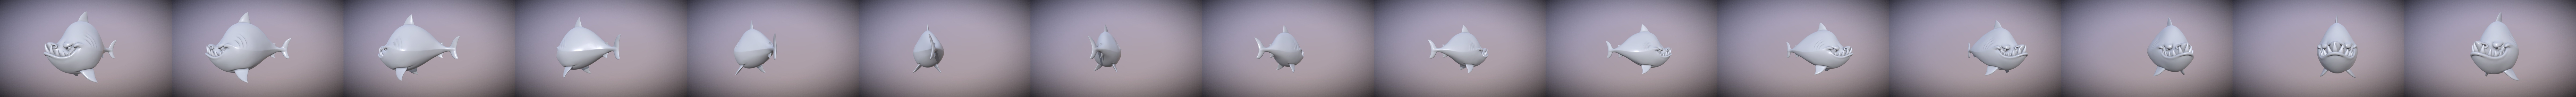 Shark Sculpt - 3D model by CG Cookie (@cgcookie) [fa4815f]